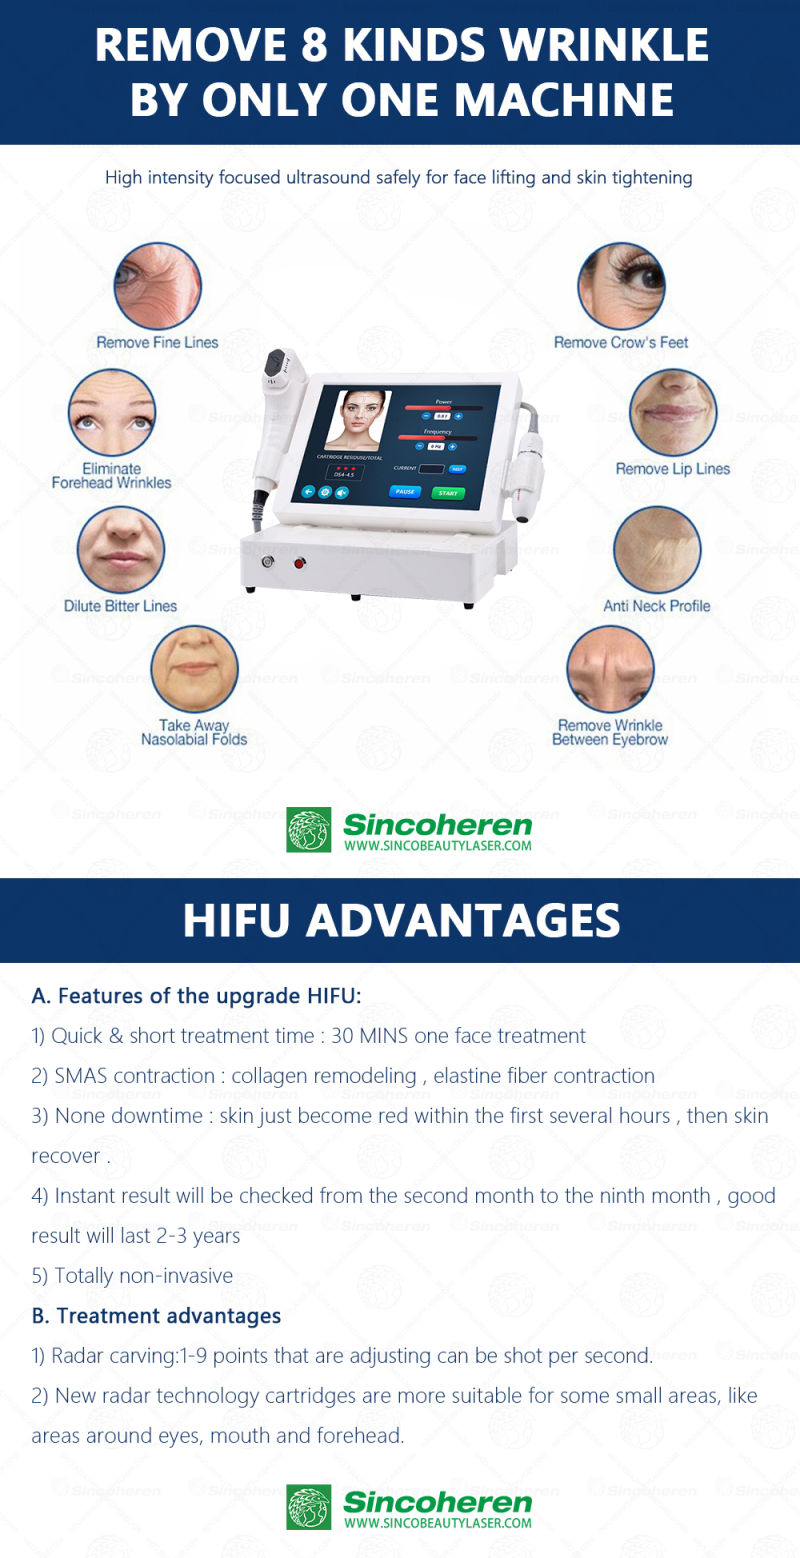 Korea Powerful 3D 4D Hifu /Portable Hifu Face Lift Machine